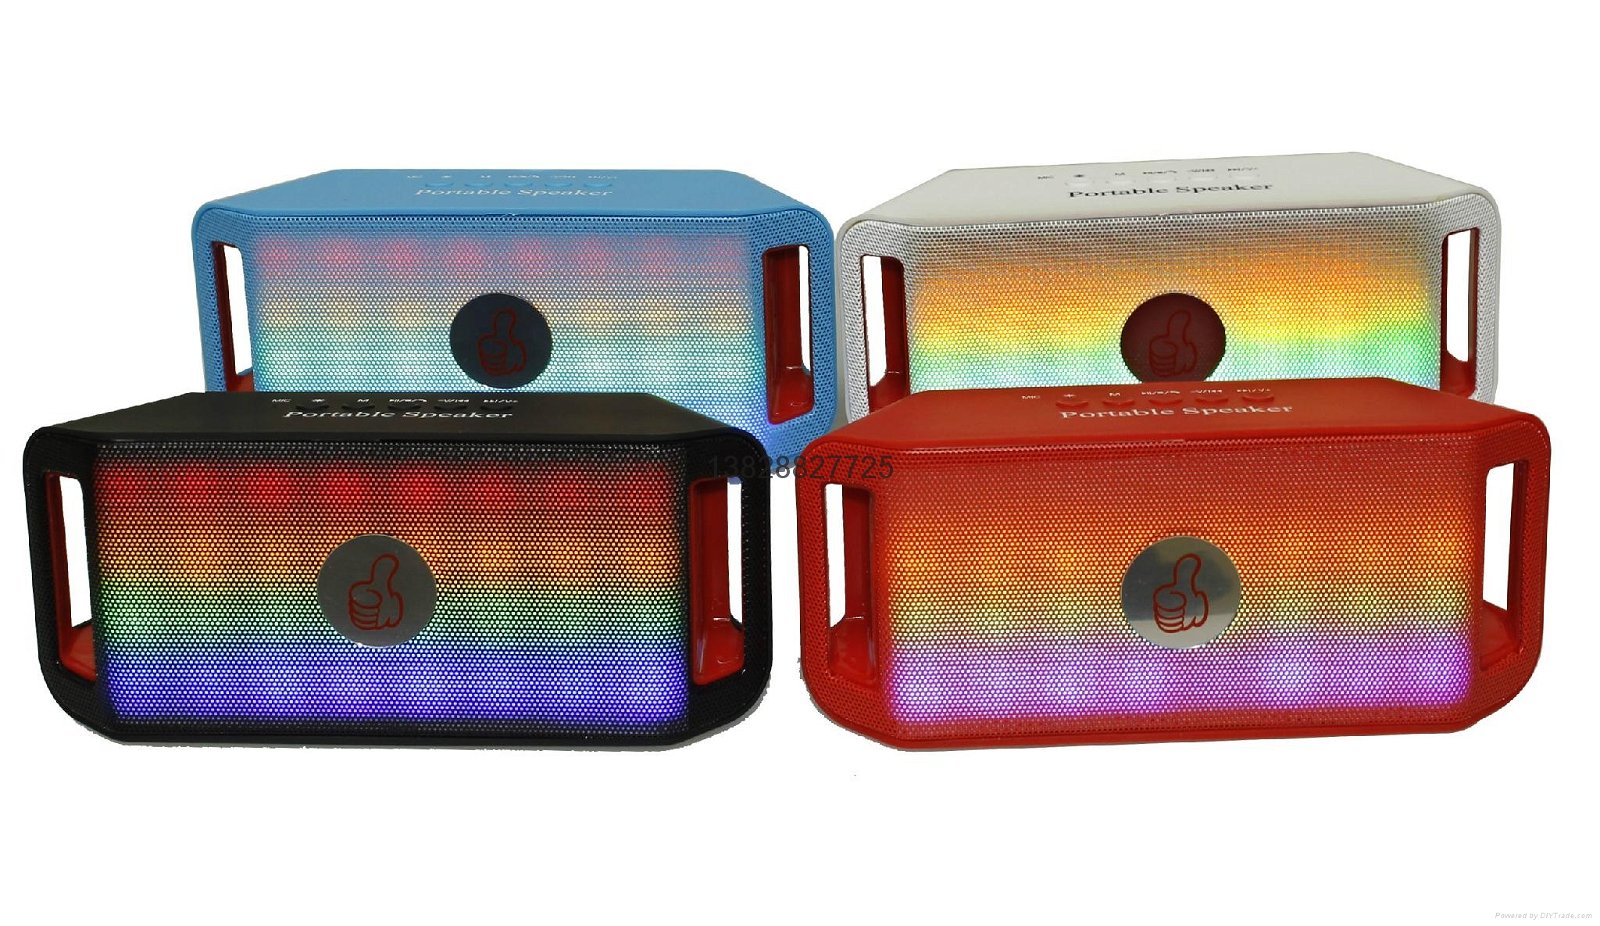 2015 perfect sound portable bluetooth speaker led light 3